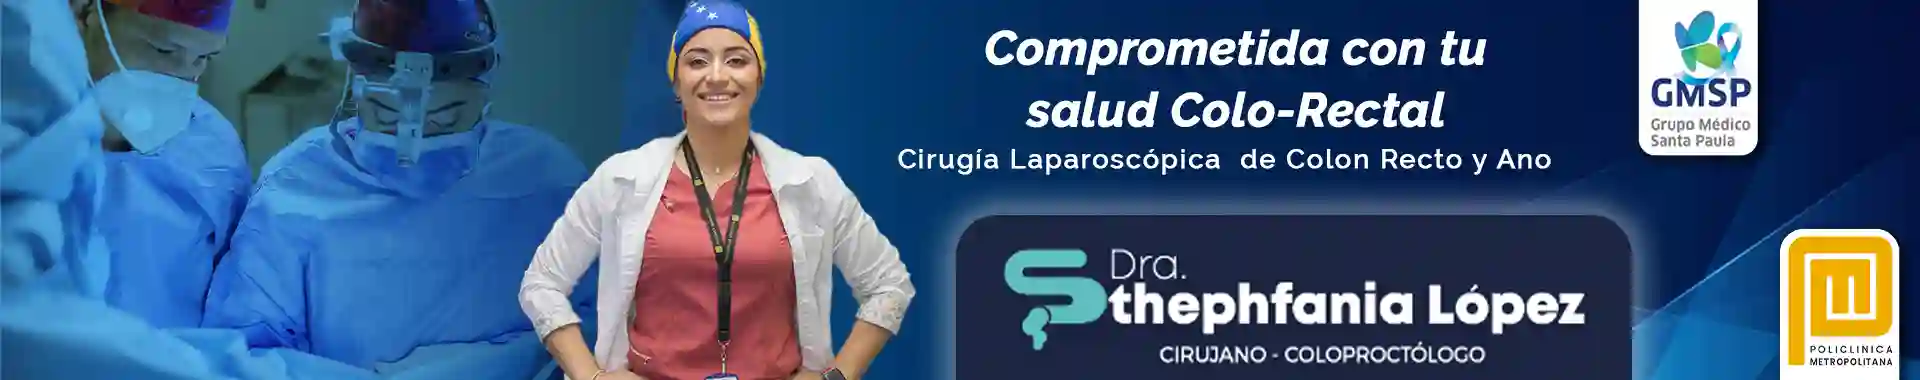 Imagen 6 del perfil de Dra. Sthephfania López